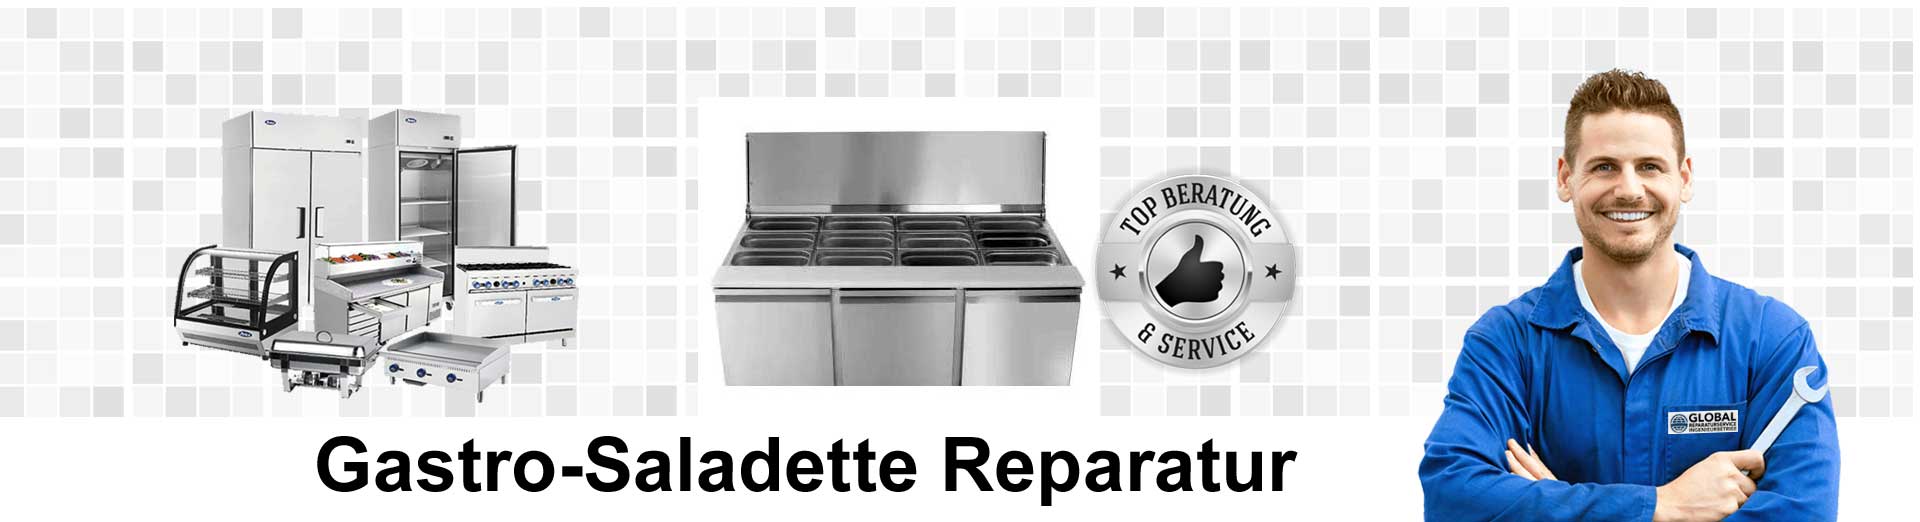 Gastro-Saladette-reparatur berlin